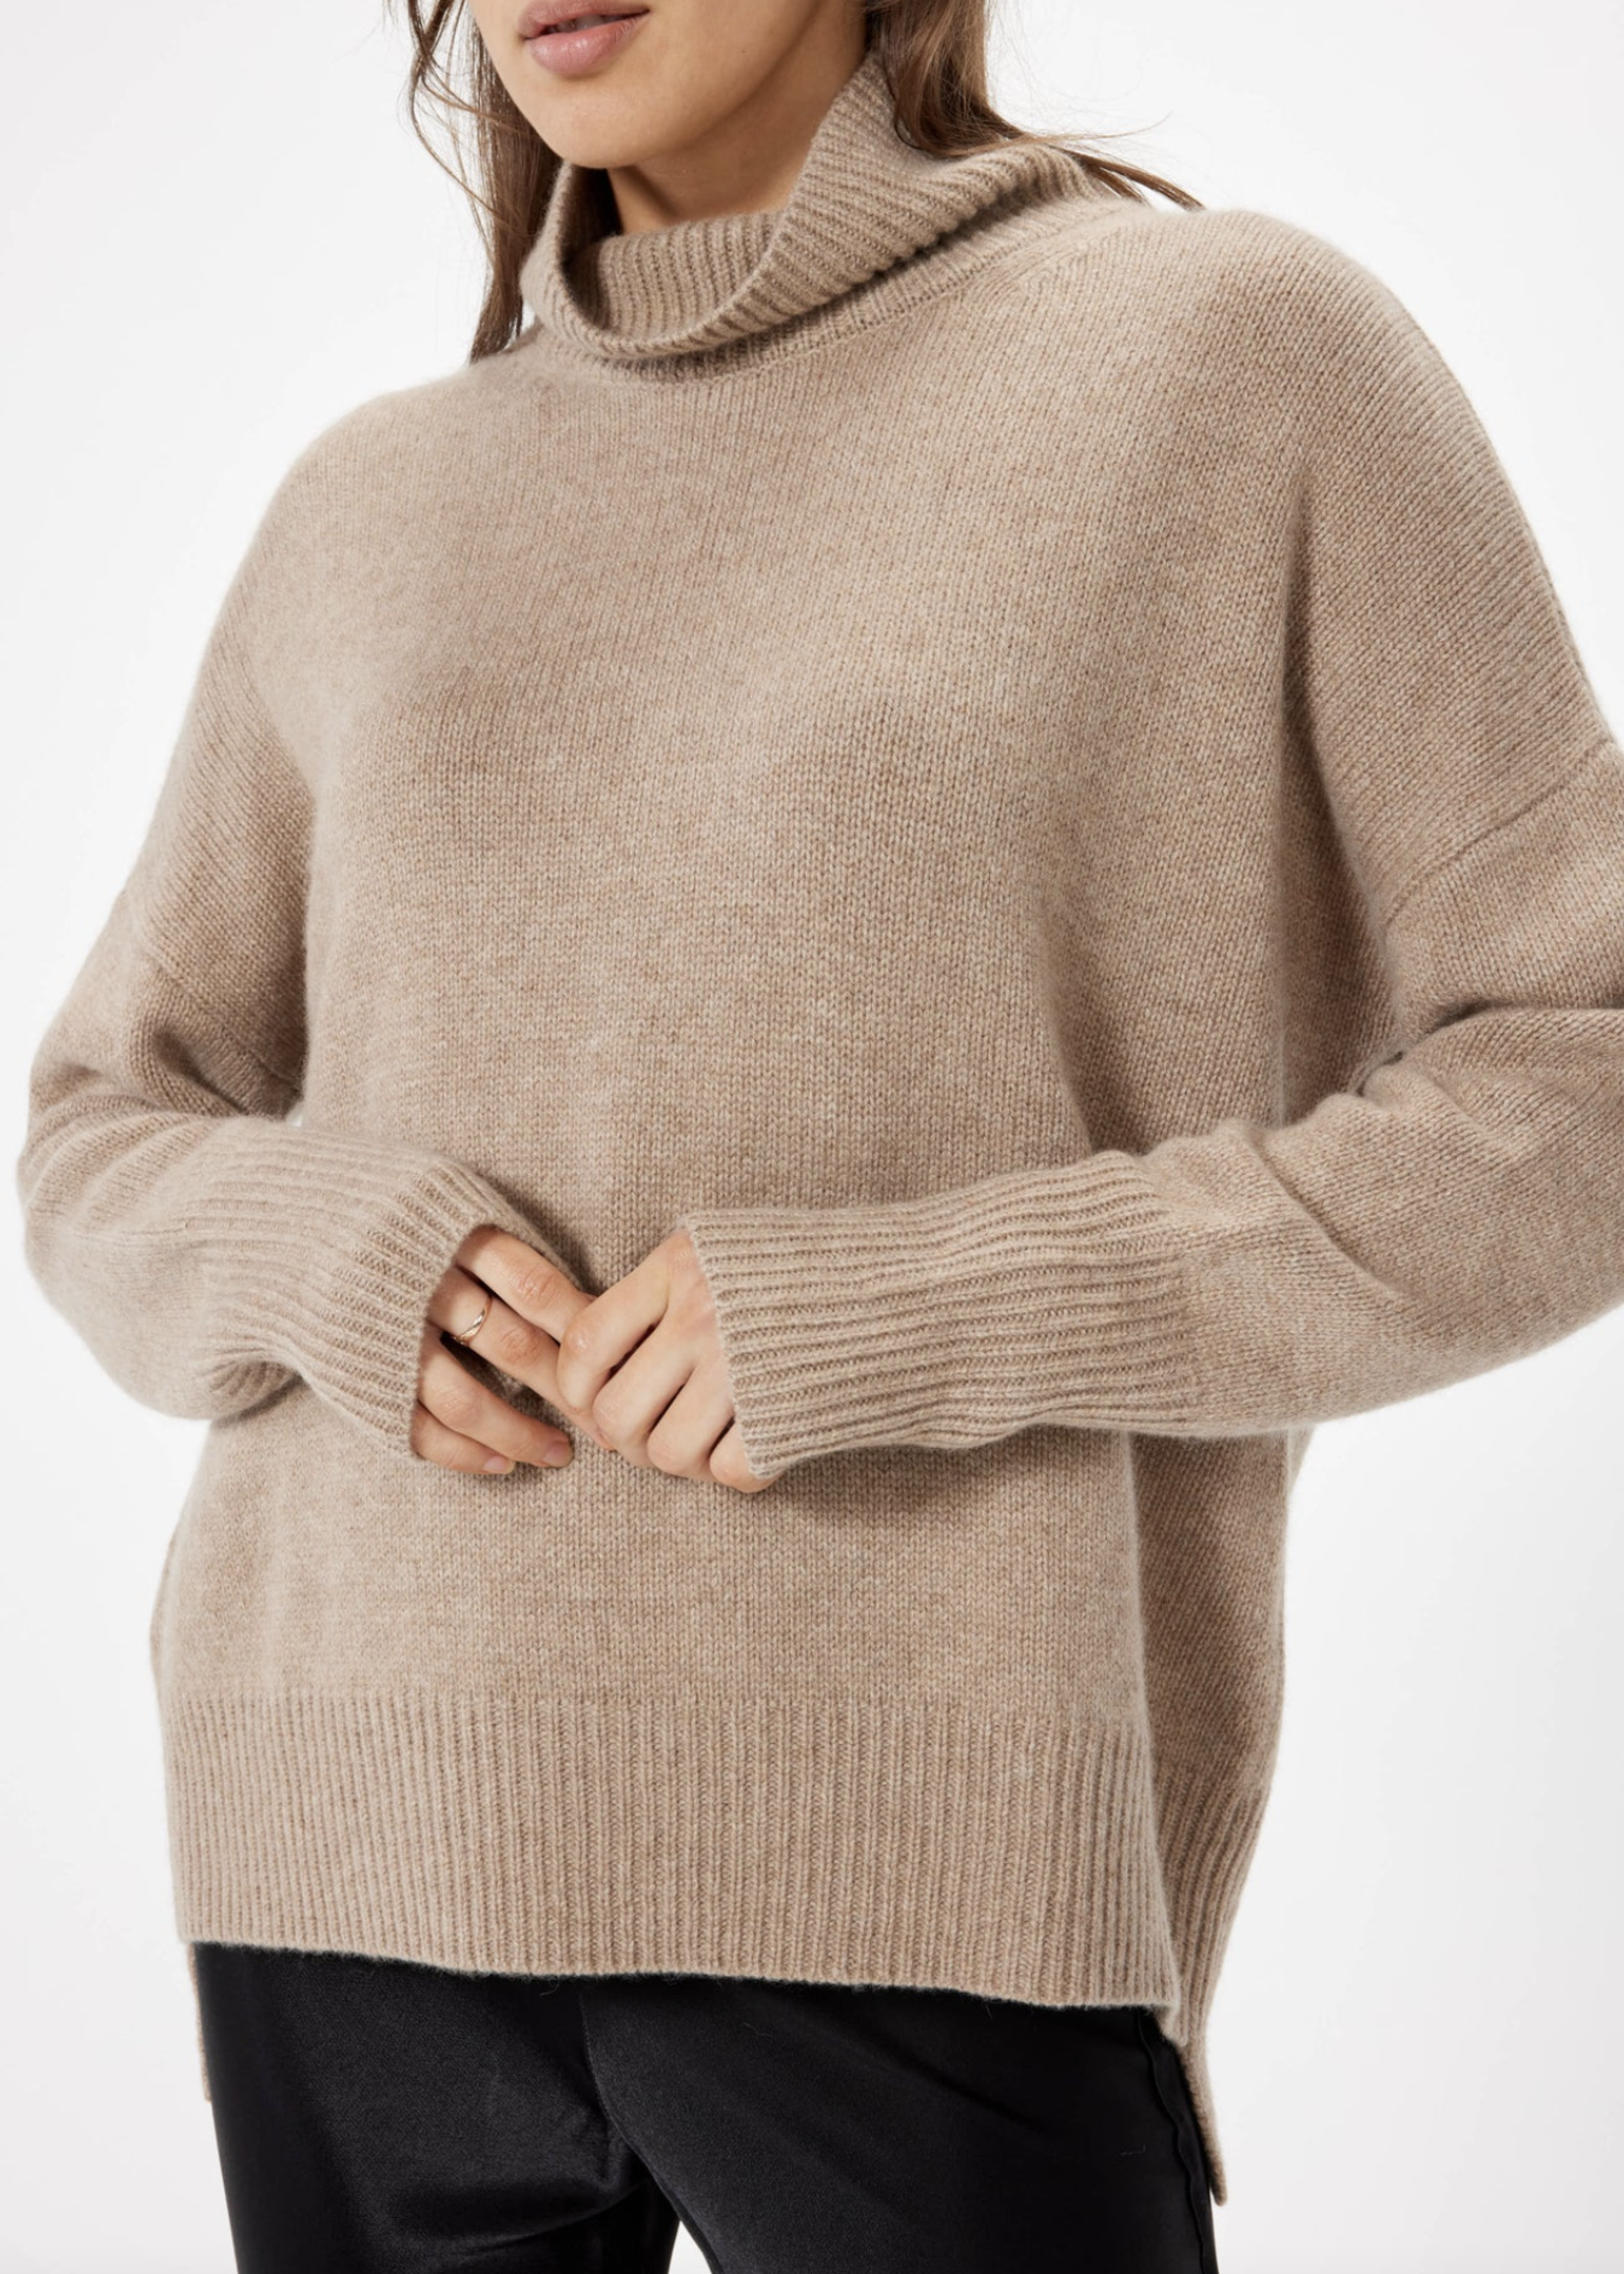 Elitaire Boutique Pullover Turtleneck Sweater